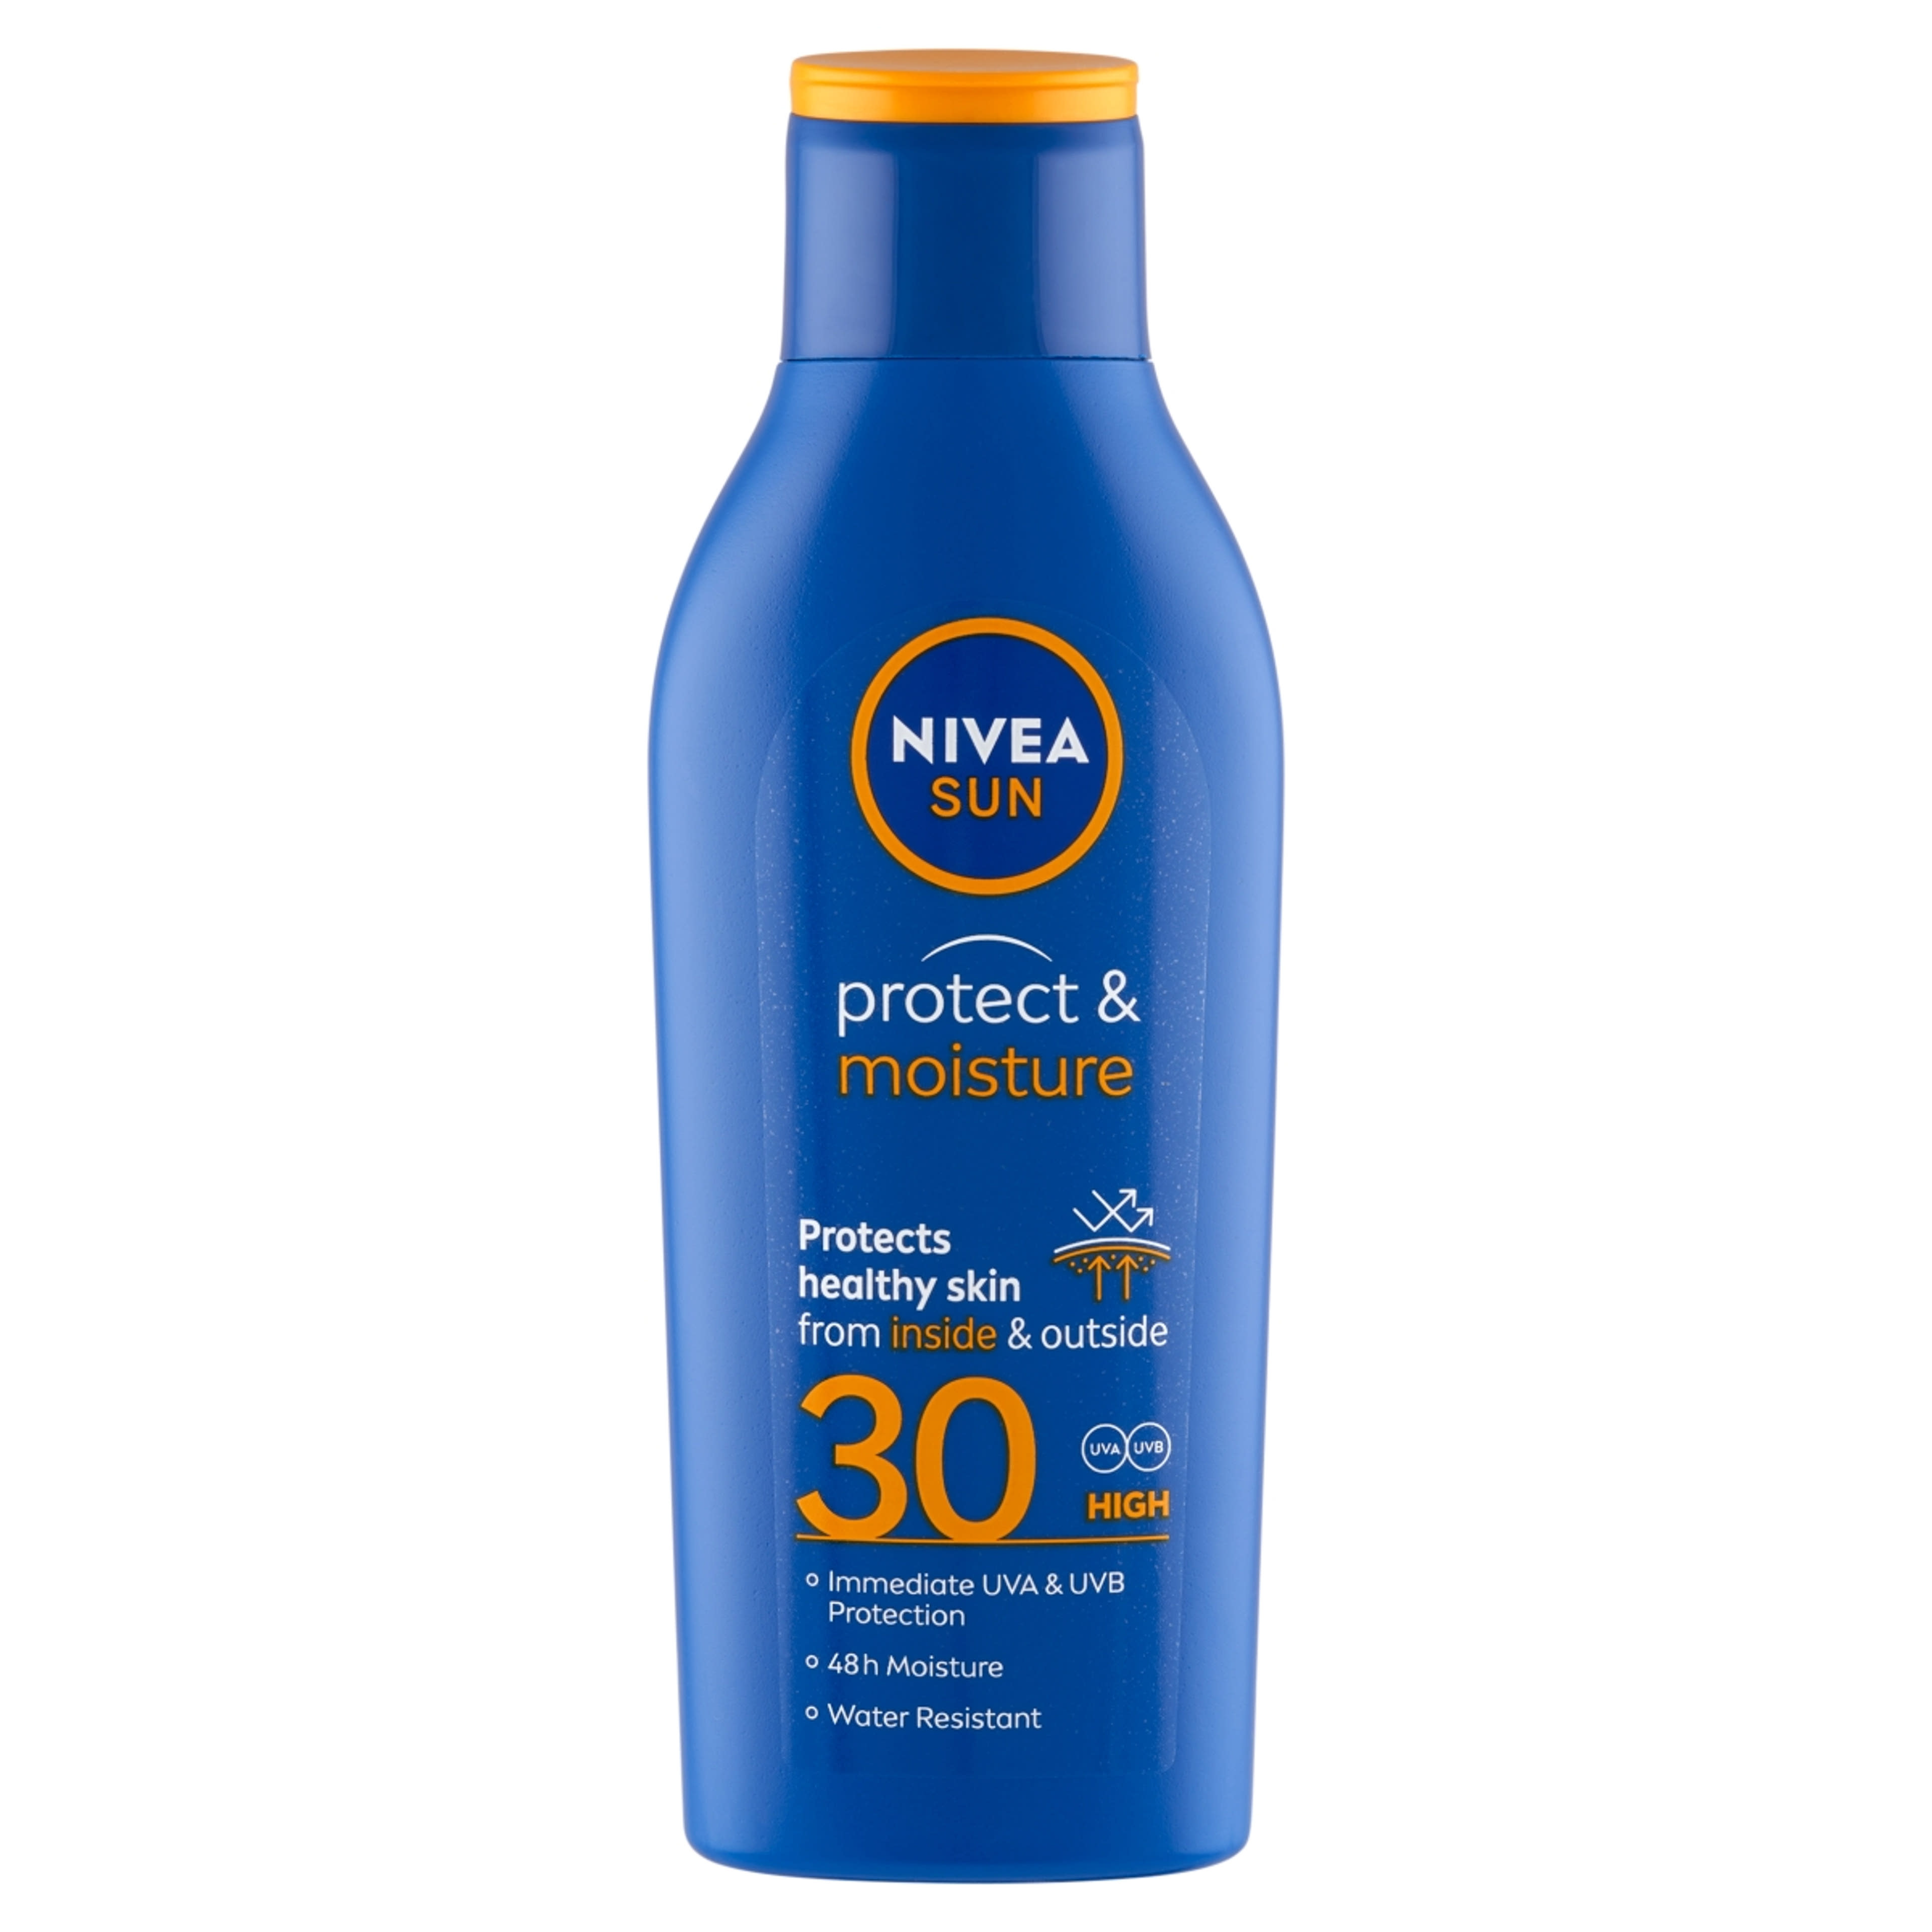 NIVEA SUN Protect & Moisture naptej FF30 - 200 ml